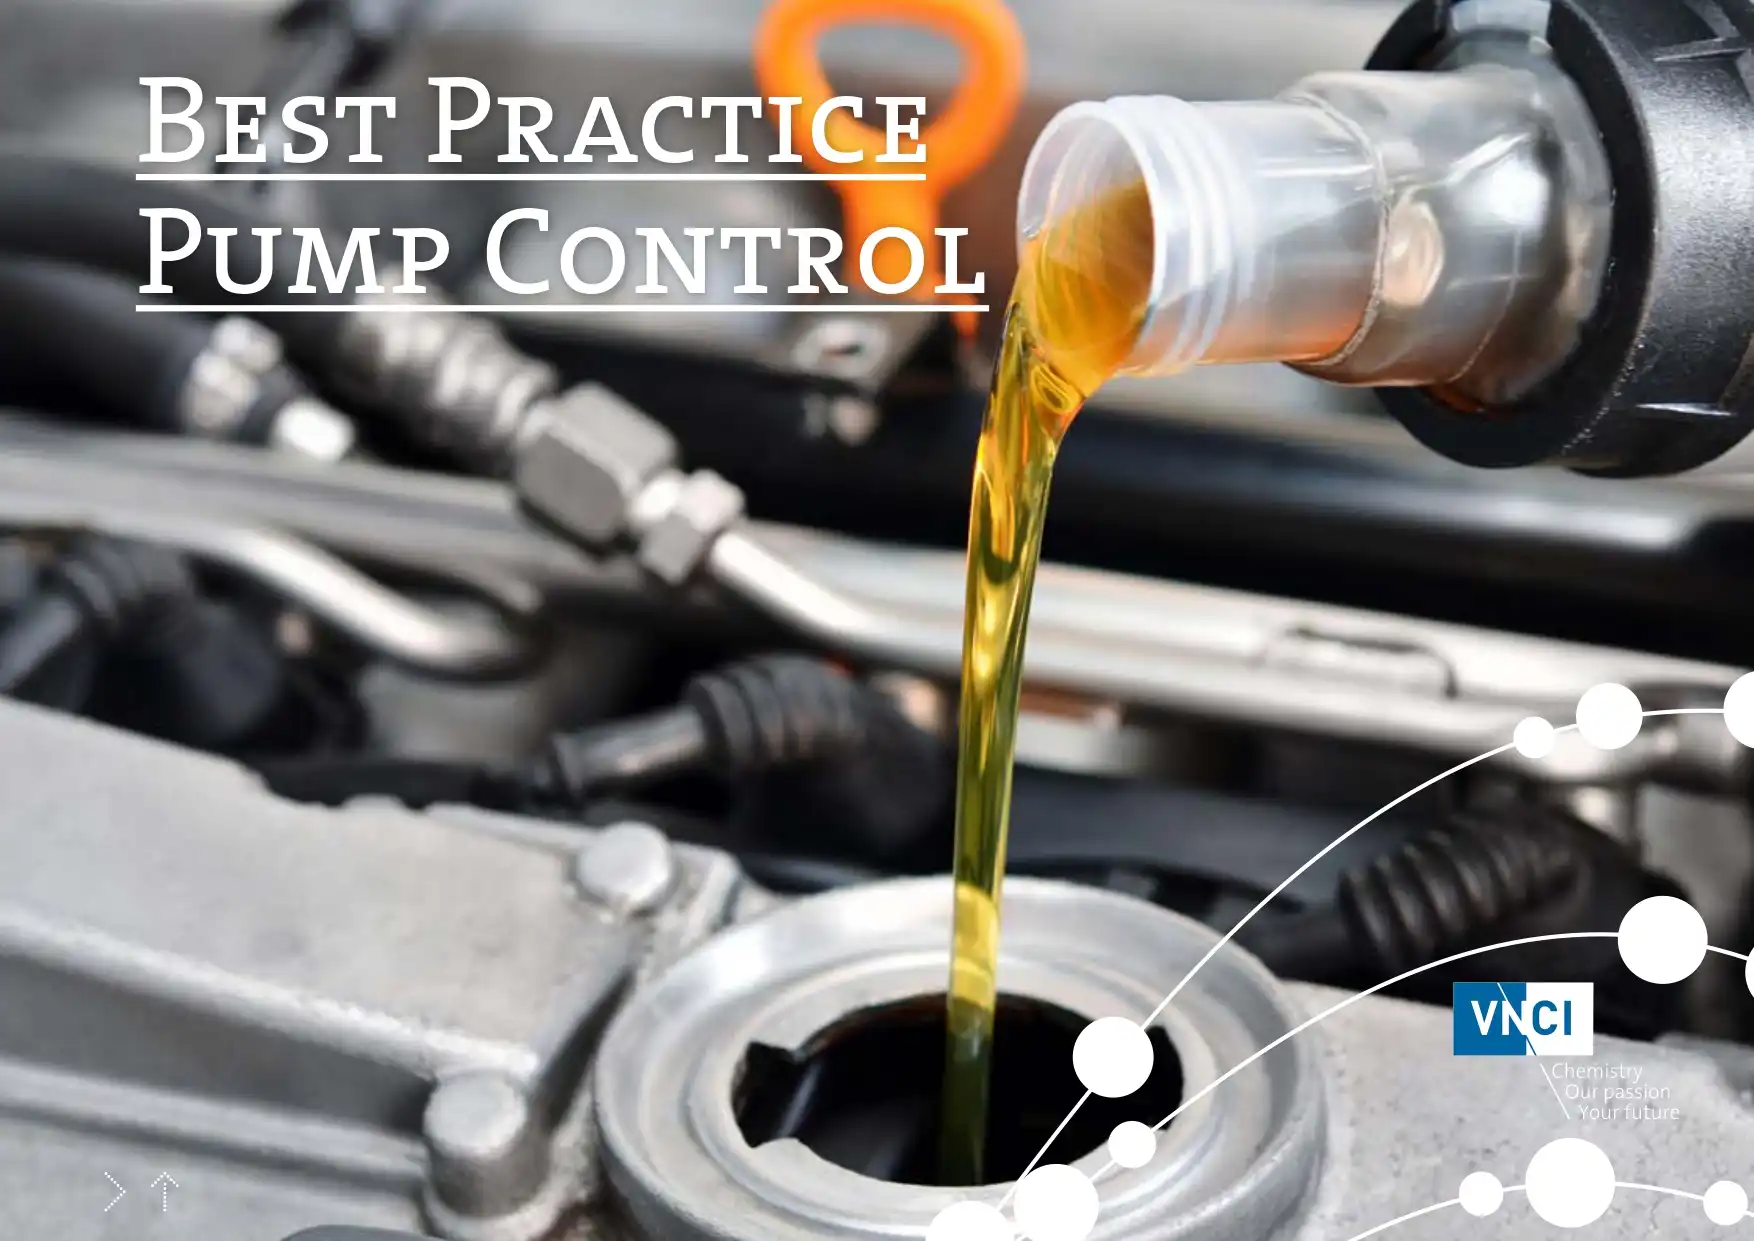 Best Practice Pump Control